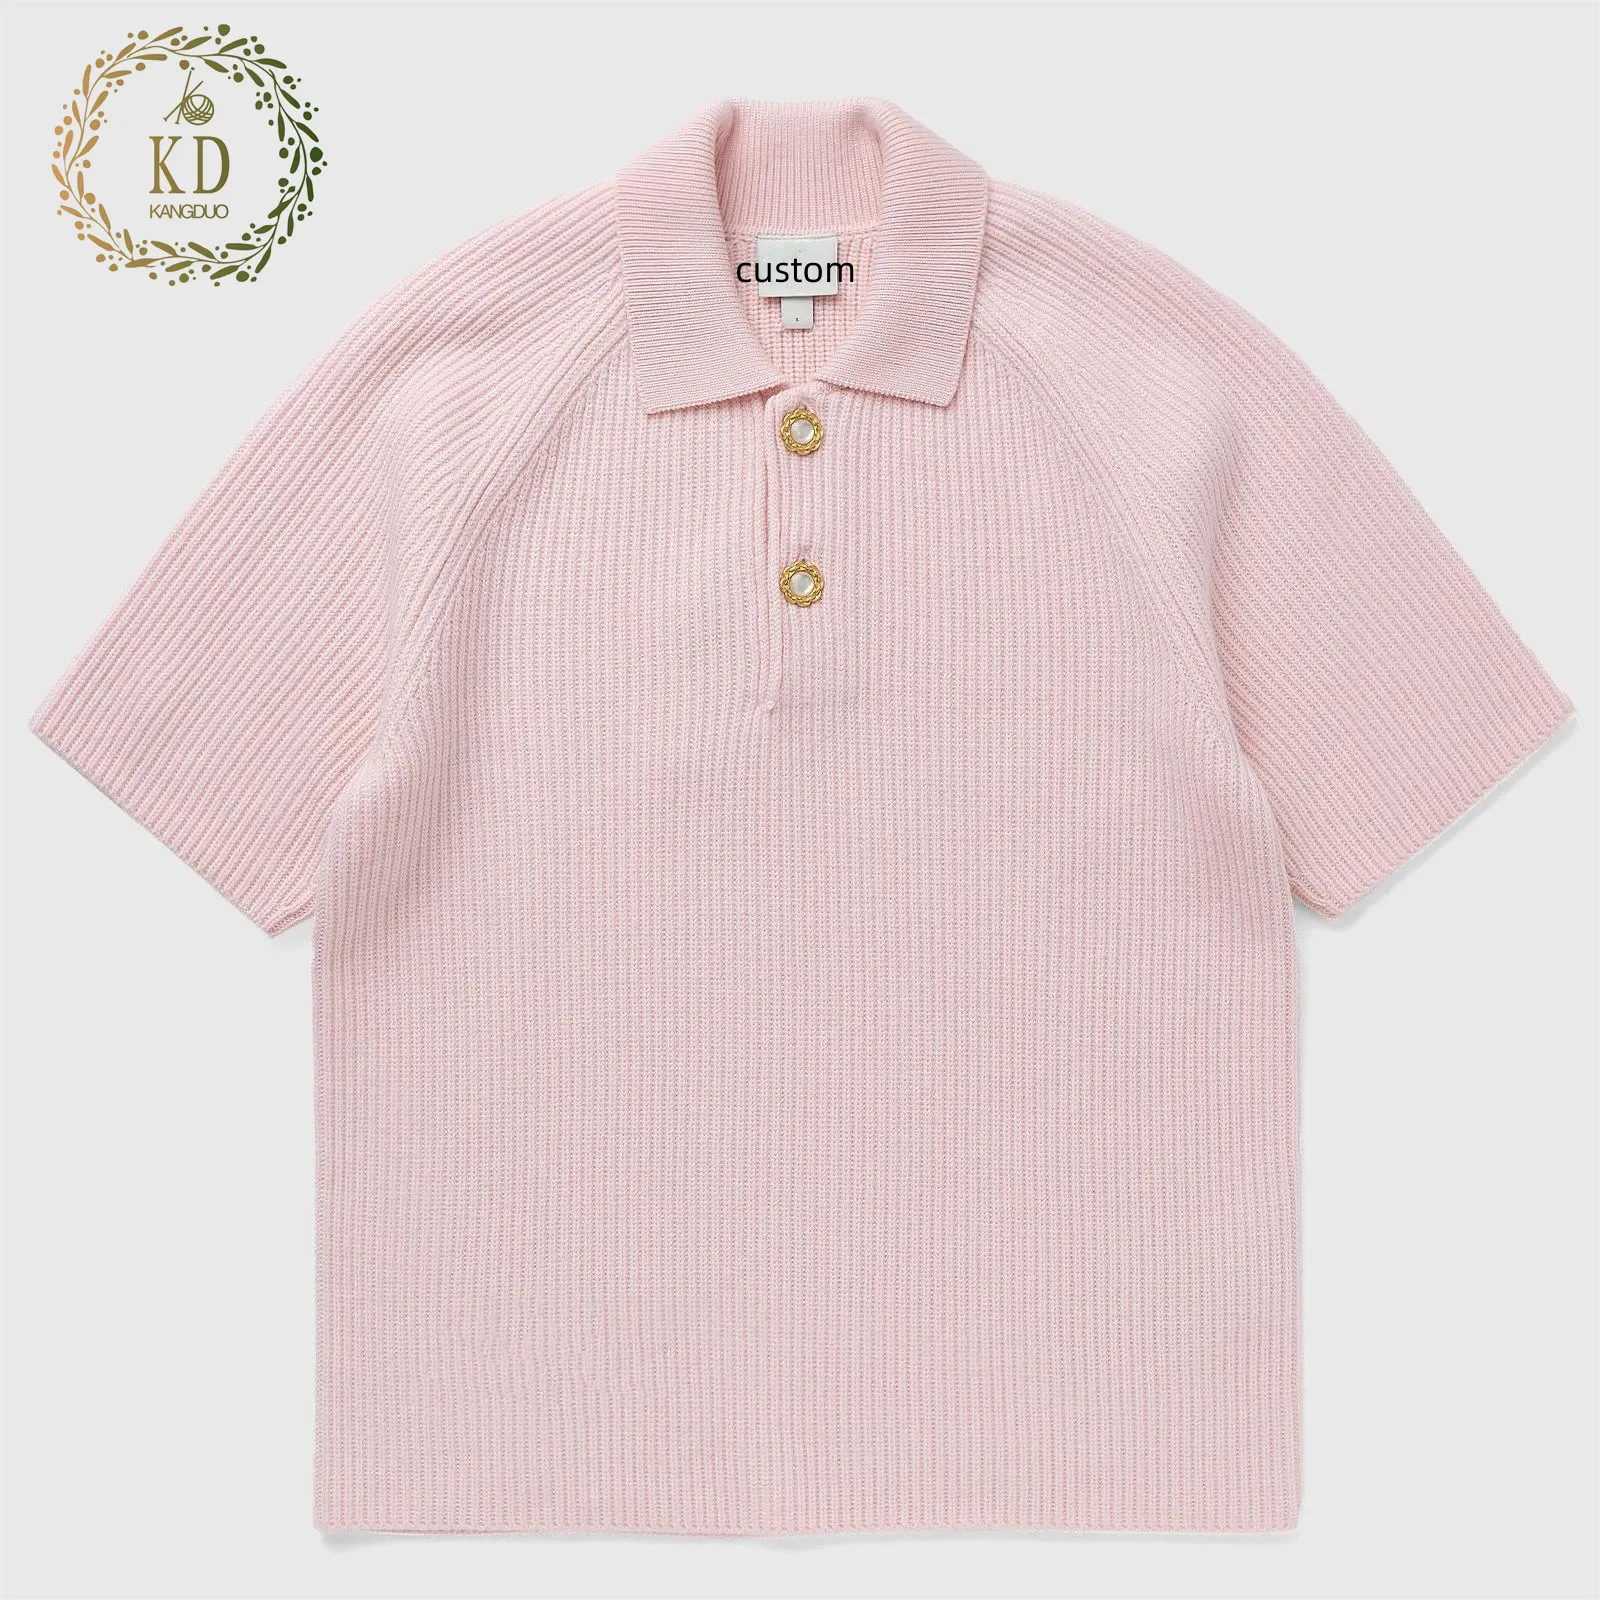 KD Knitwear Fabricante OEM ODM Summer Pink Designer Pearl Buttons 100% Lã De Malha Polo T Shirt Mulheres Camisola